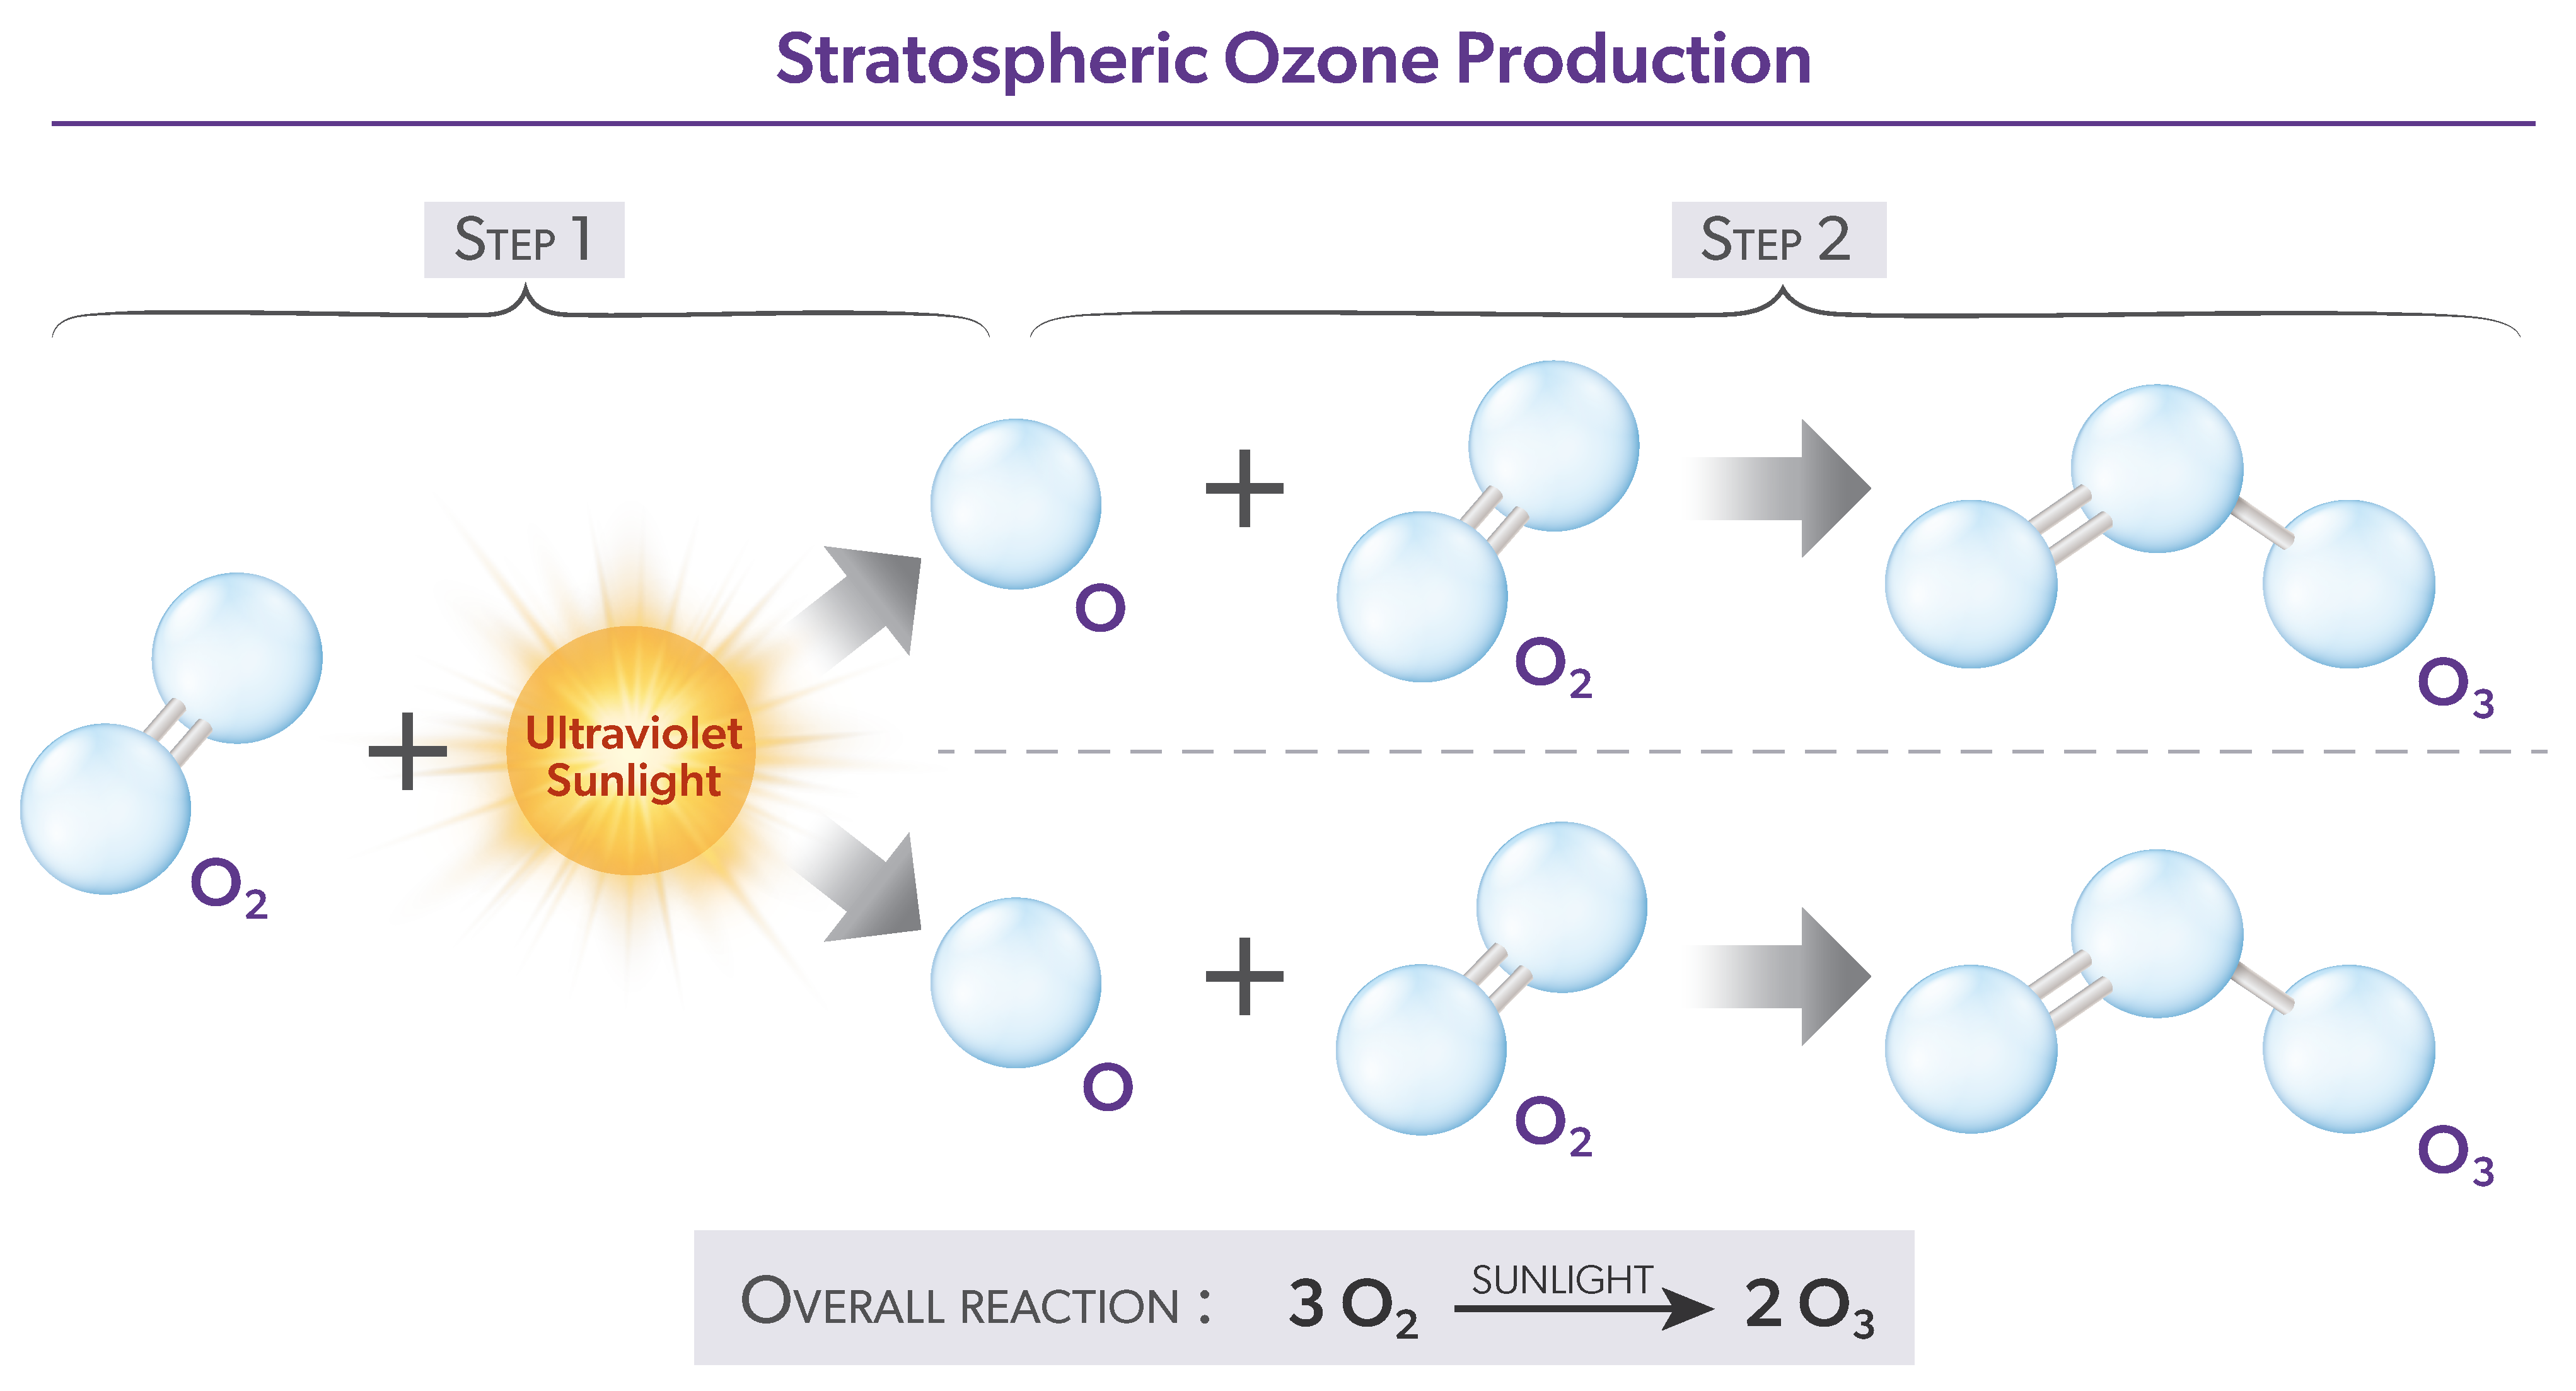 Stratospheric Ozone Production